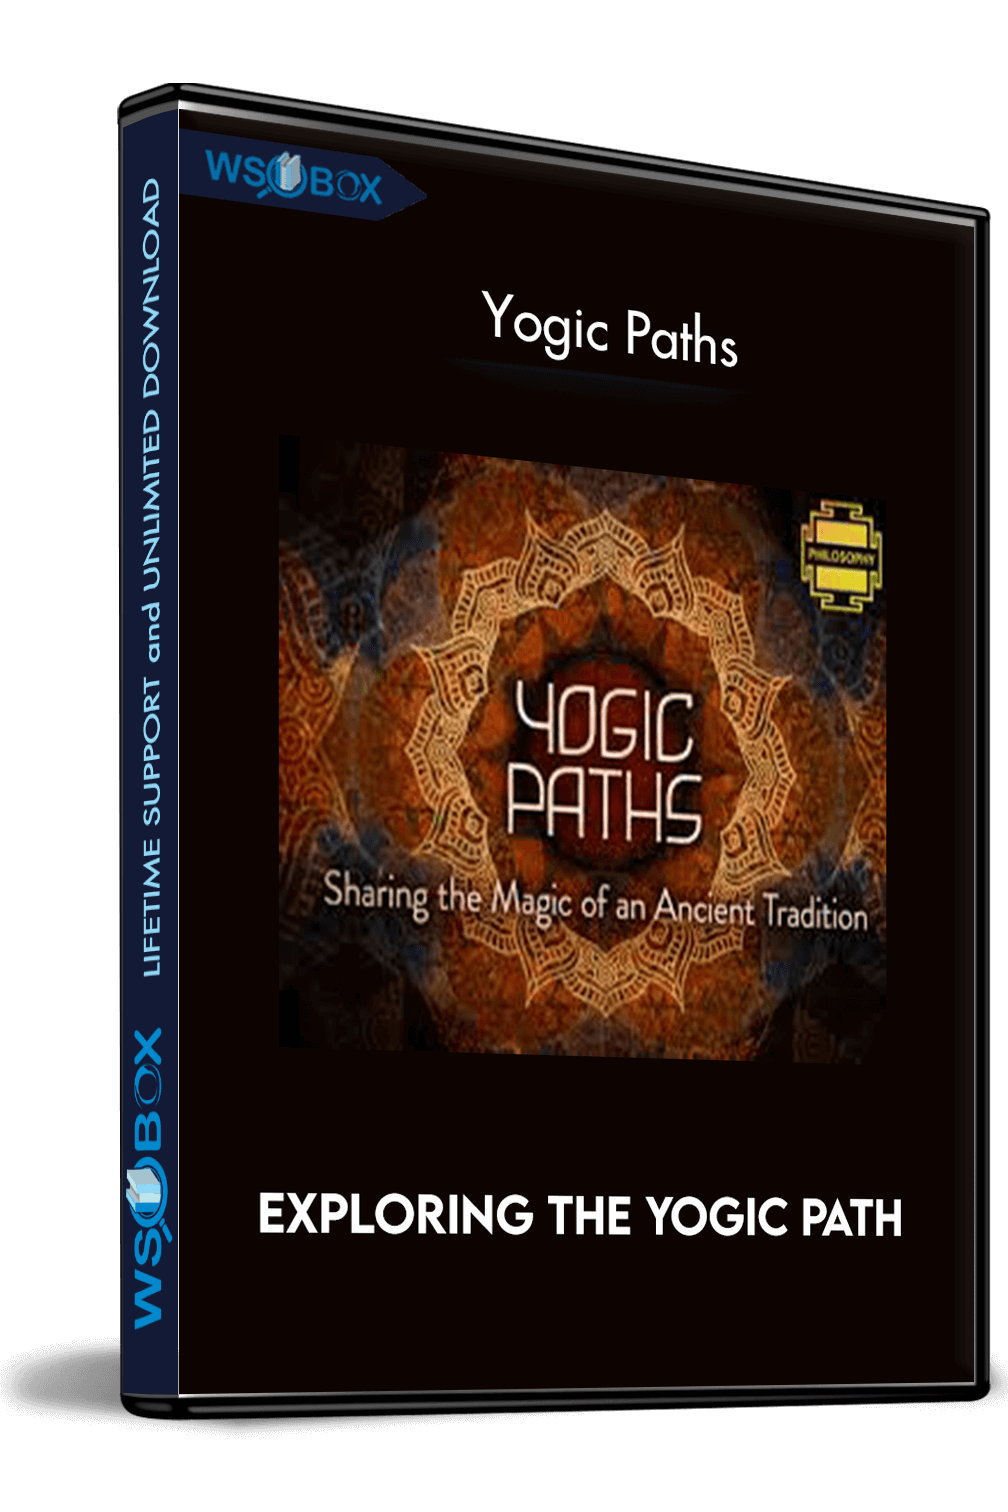 Exploring the Yogic Path – Yogic Paths